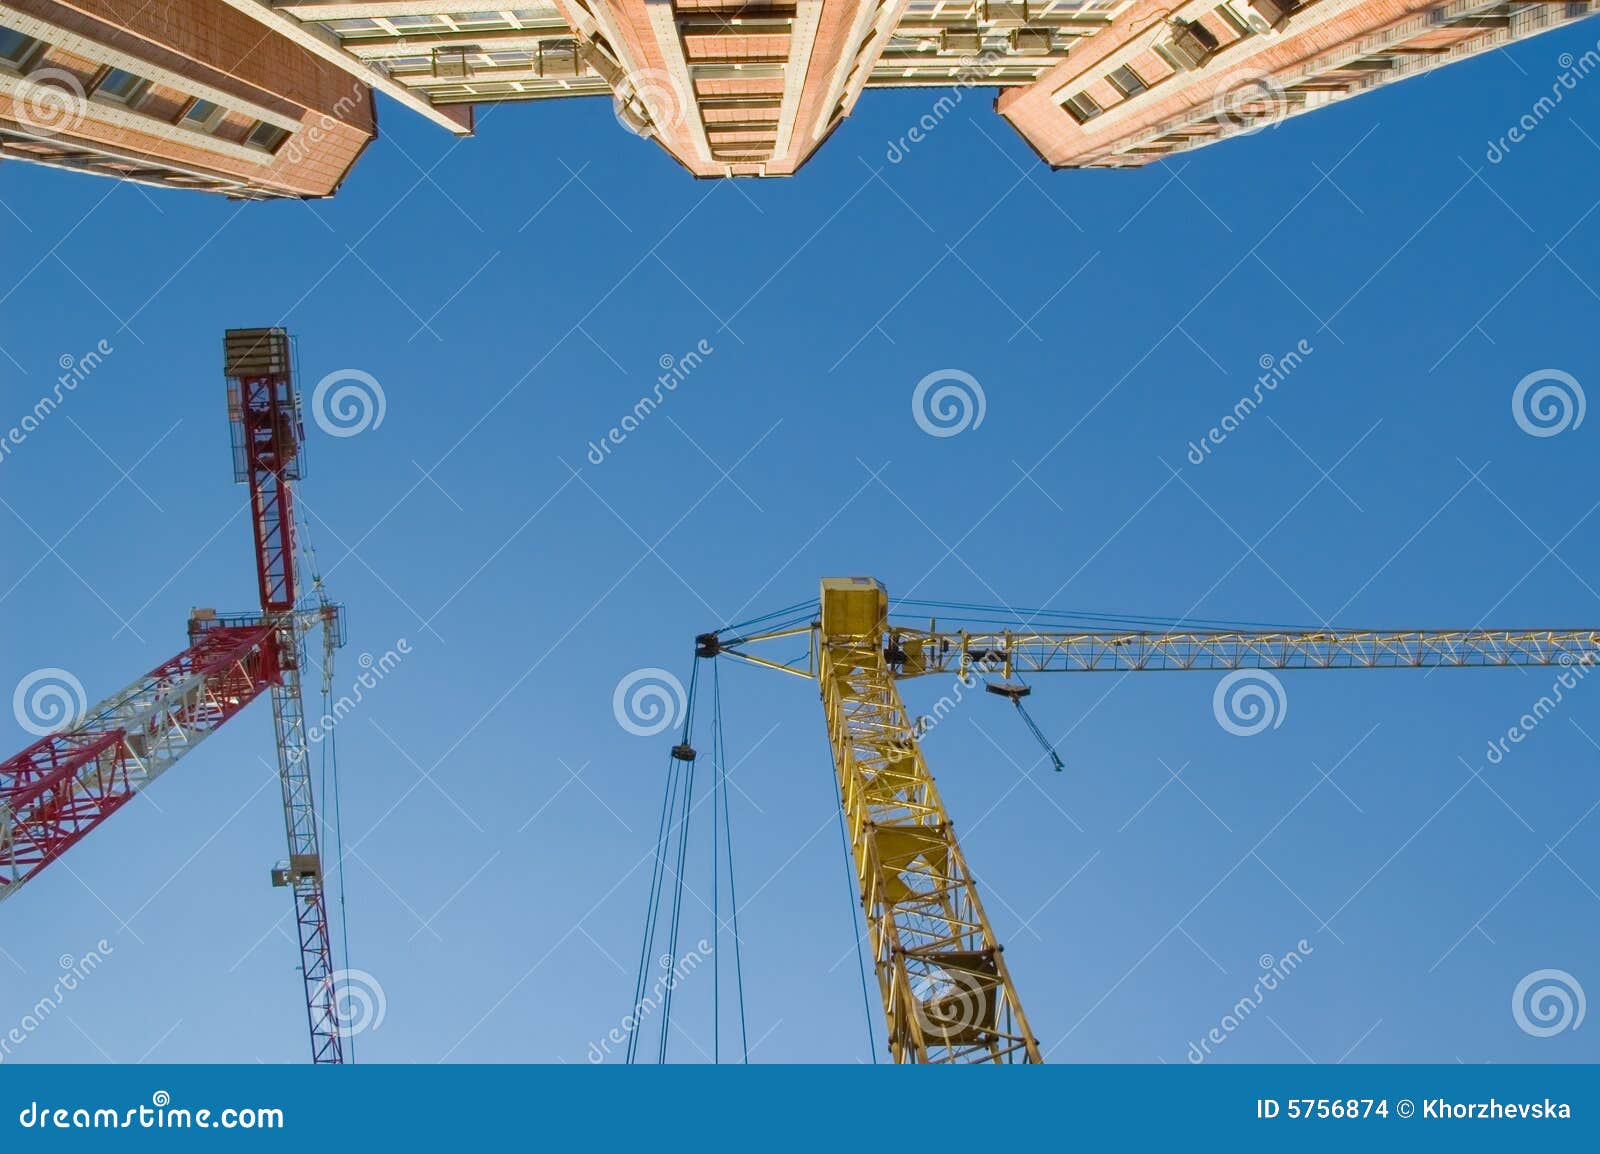 hoisting cranes and new building